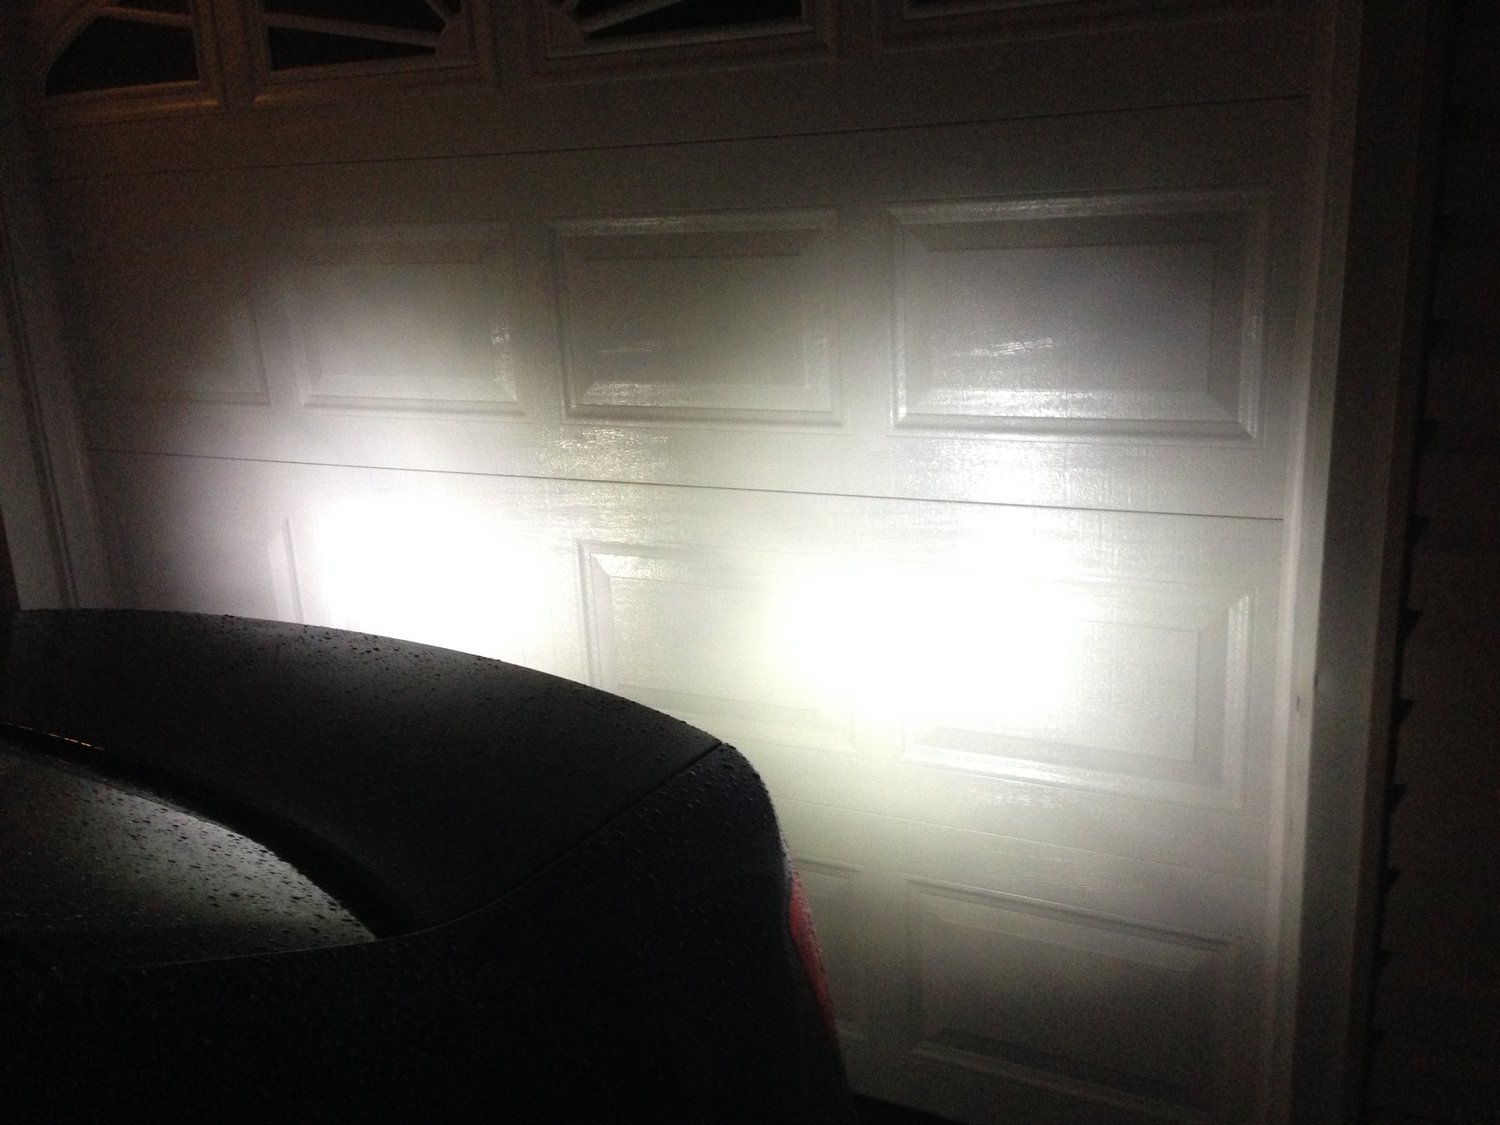 Image of LED Reverse Super Bright Pure White fits: Volkswagen MK4 & MK5 Jetta / GTI / Golf / .:r32 